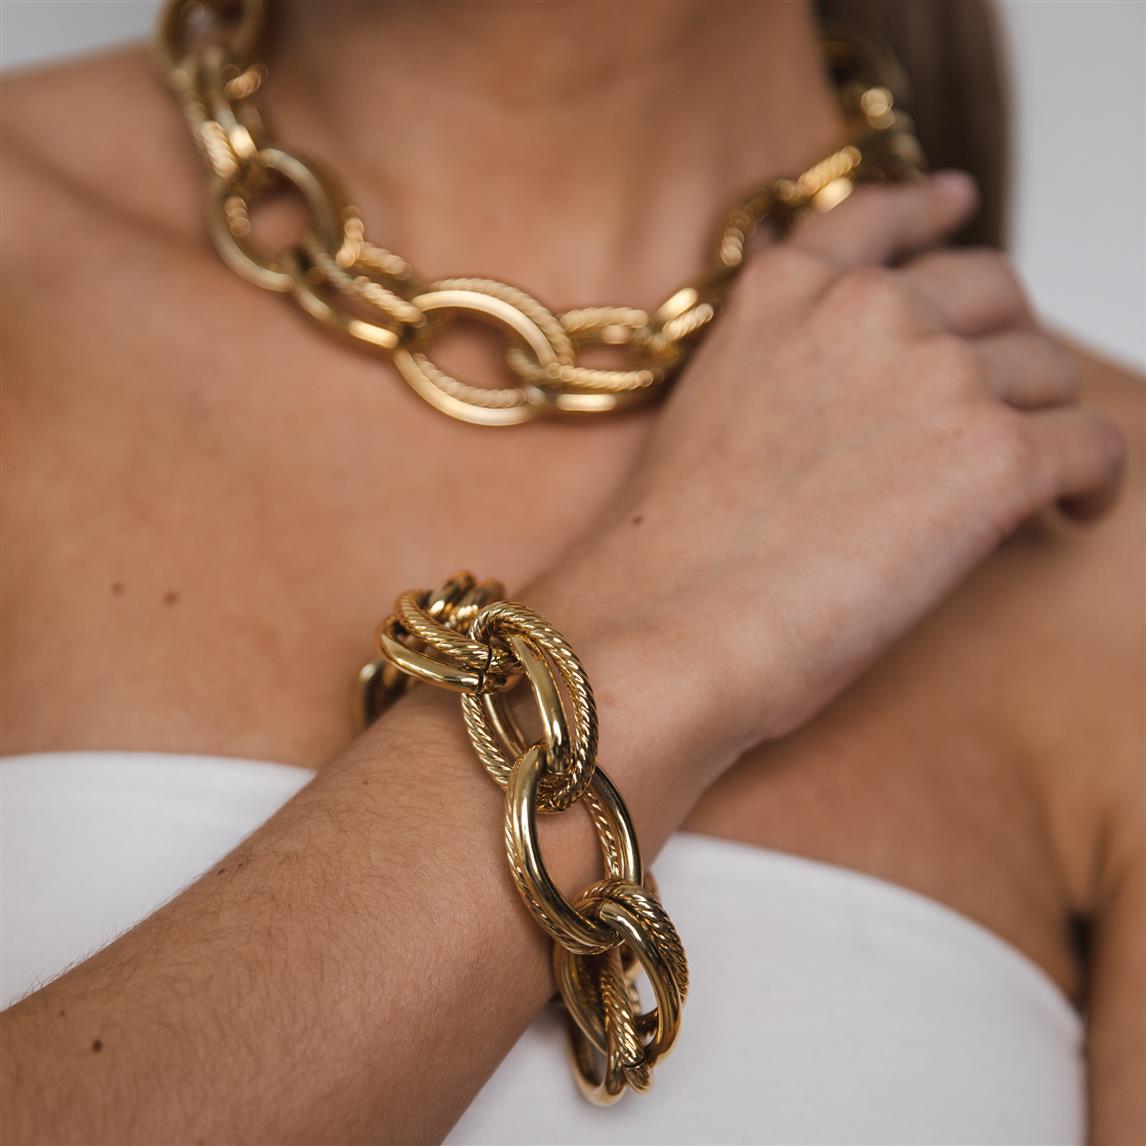 Nikki double chain gold bracelet